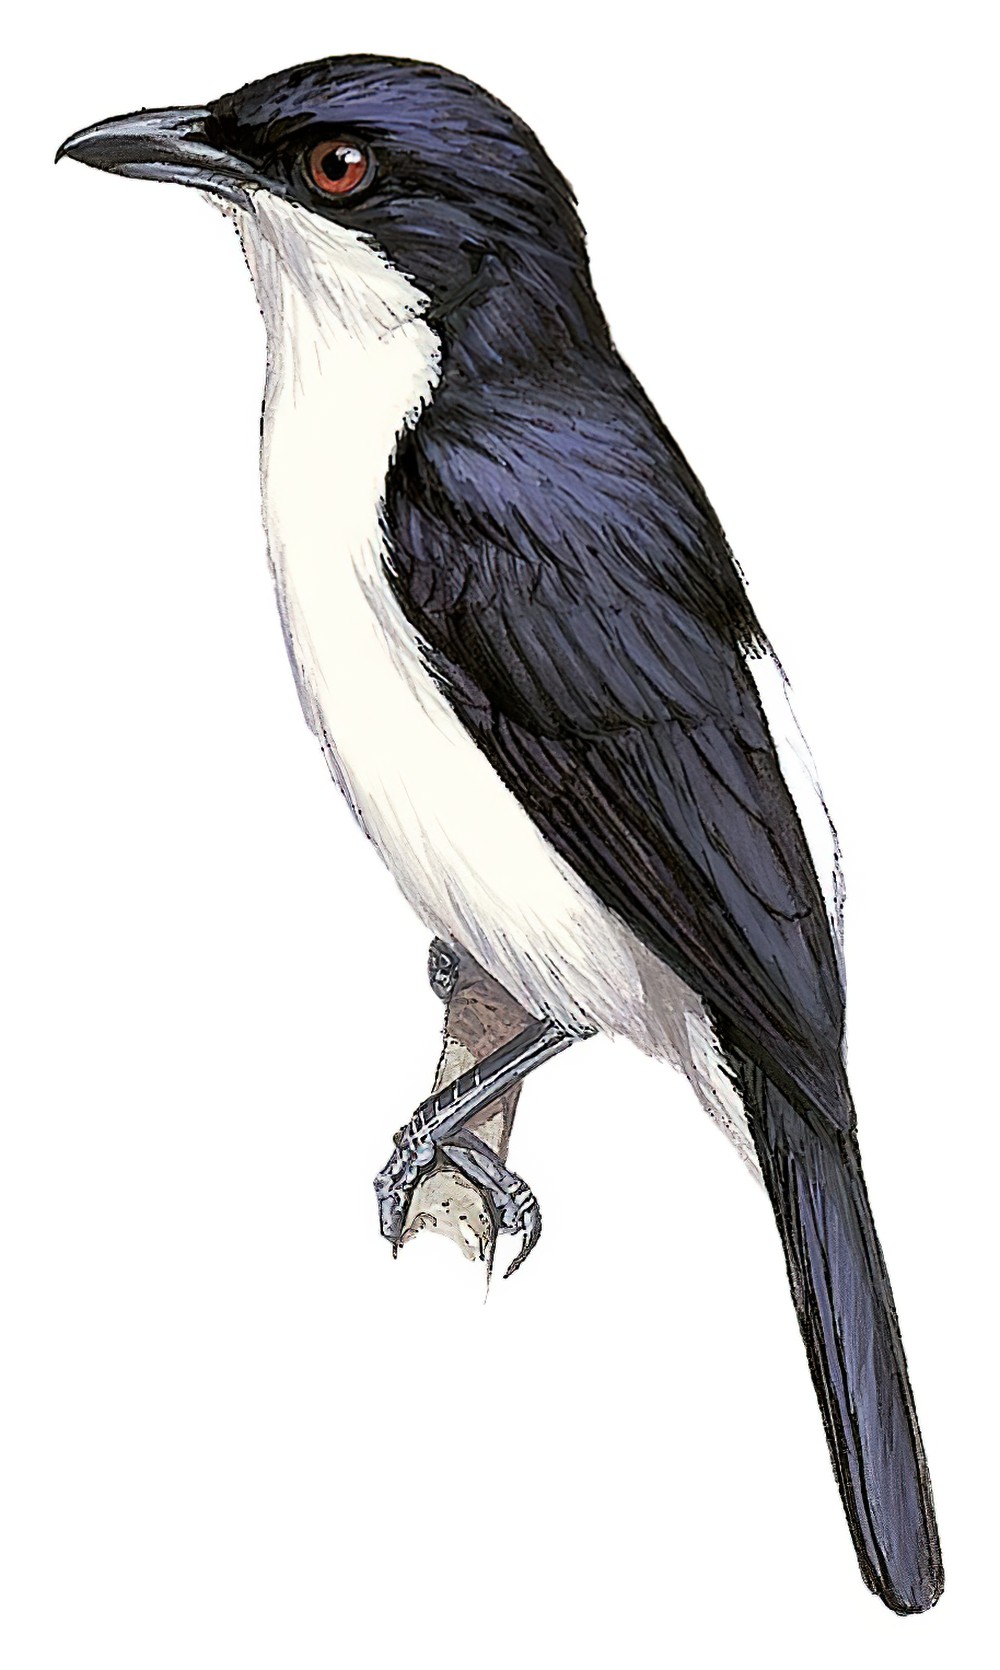 Red-eyed Puffback / Dryoscopus senegalensis